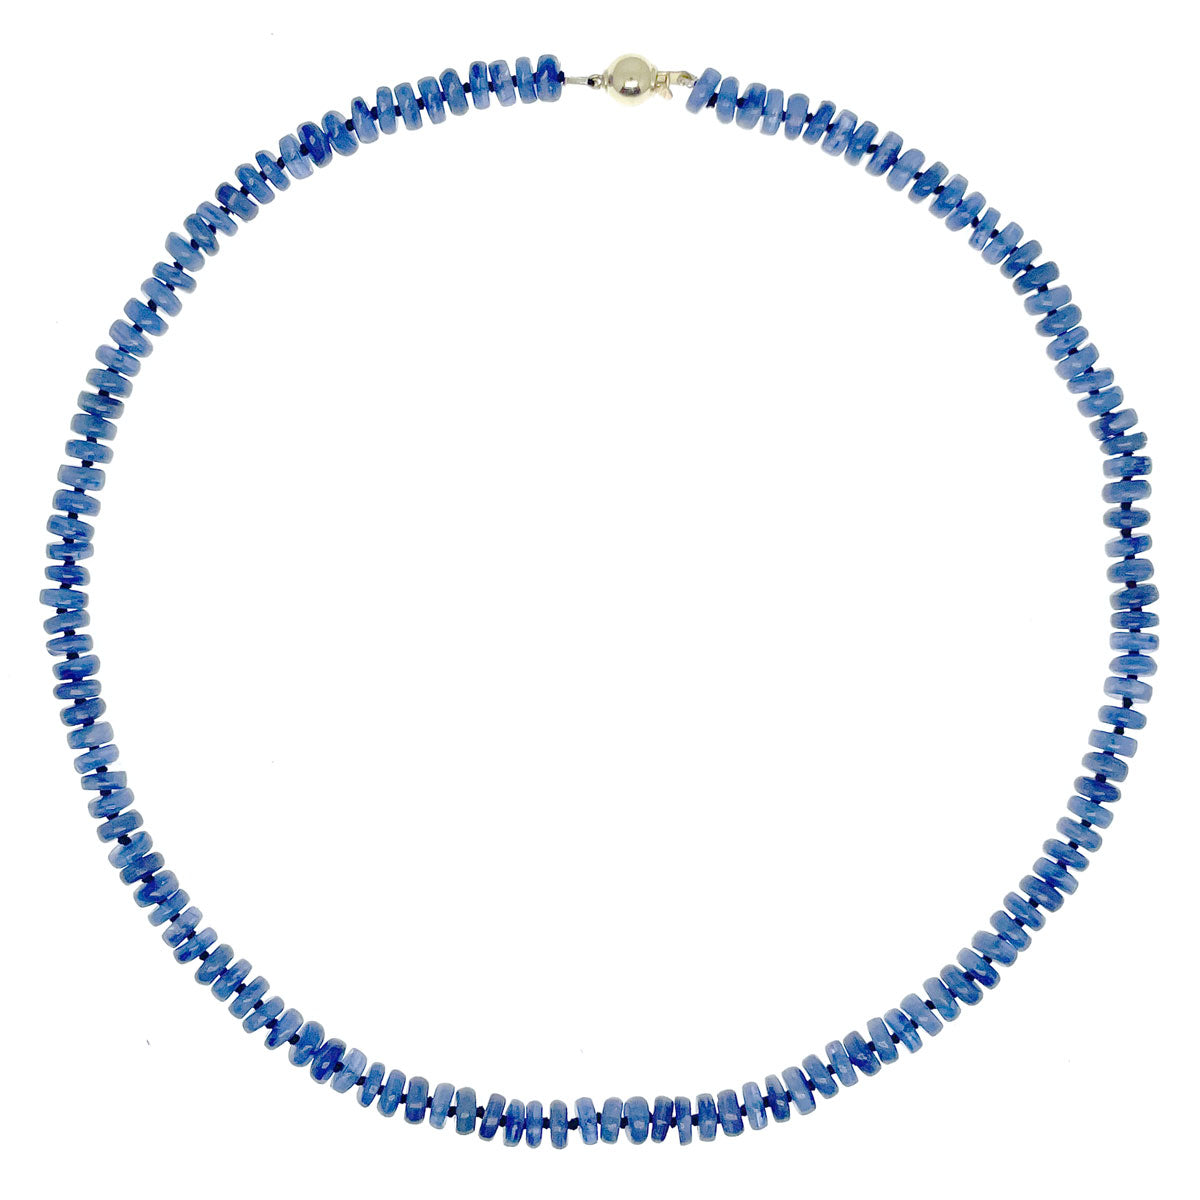 Beaded Kyanite Necklace - Medium Size